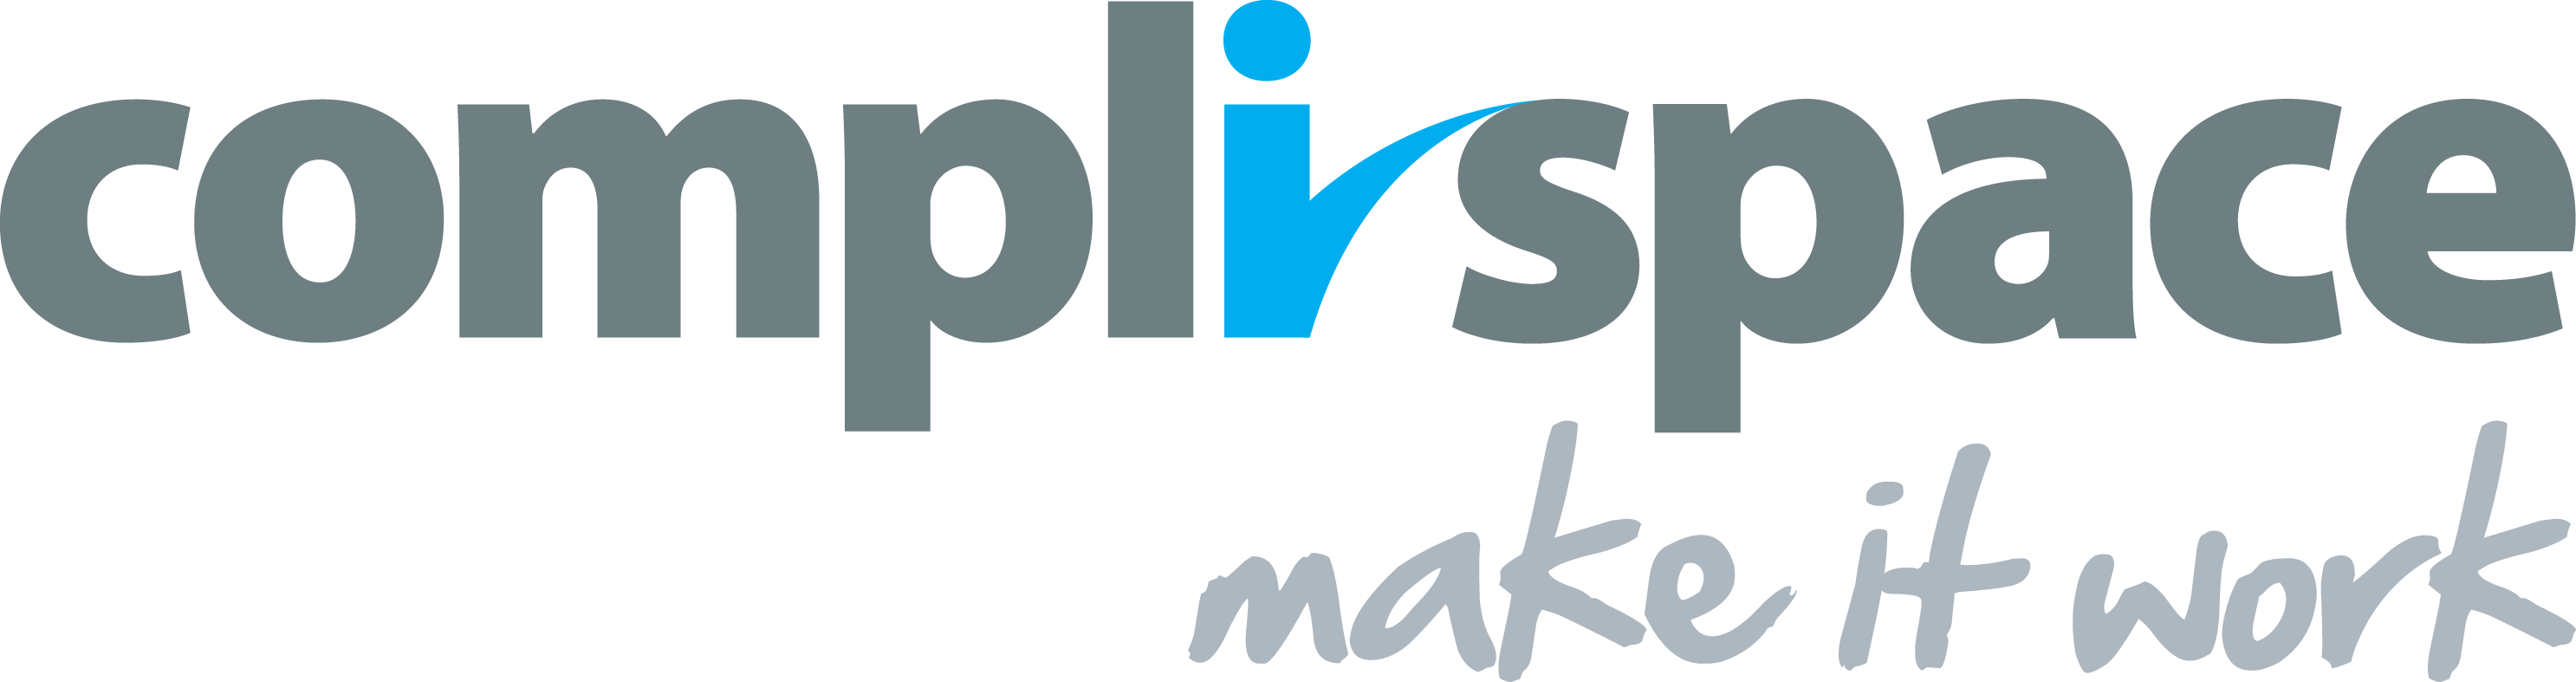 CompliSpace-Make-it-Work-logo